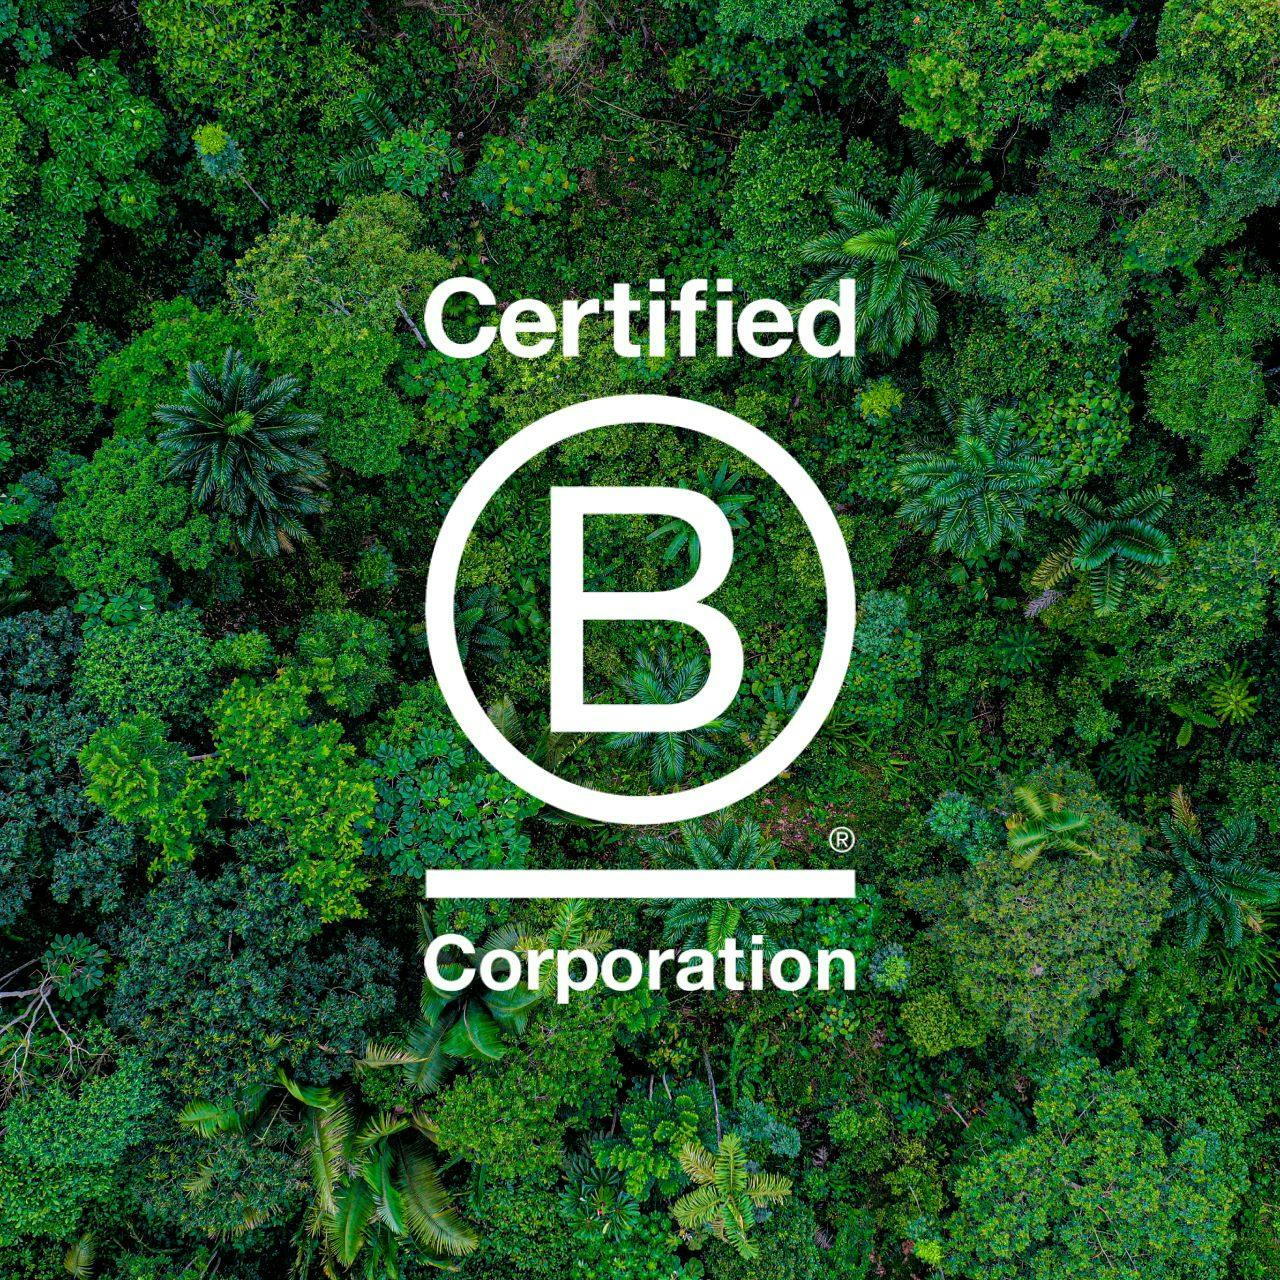 We’re B Corp certified!